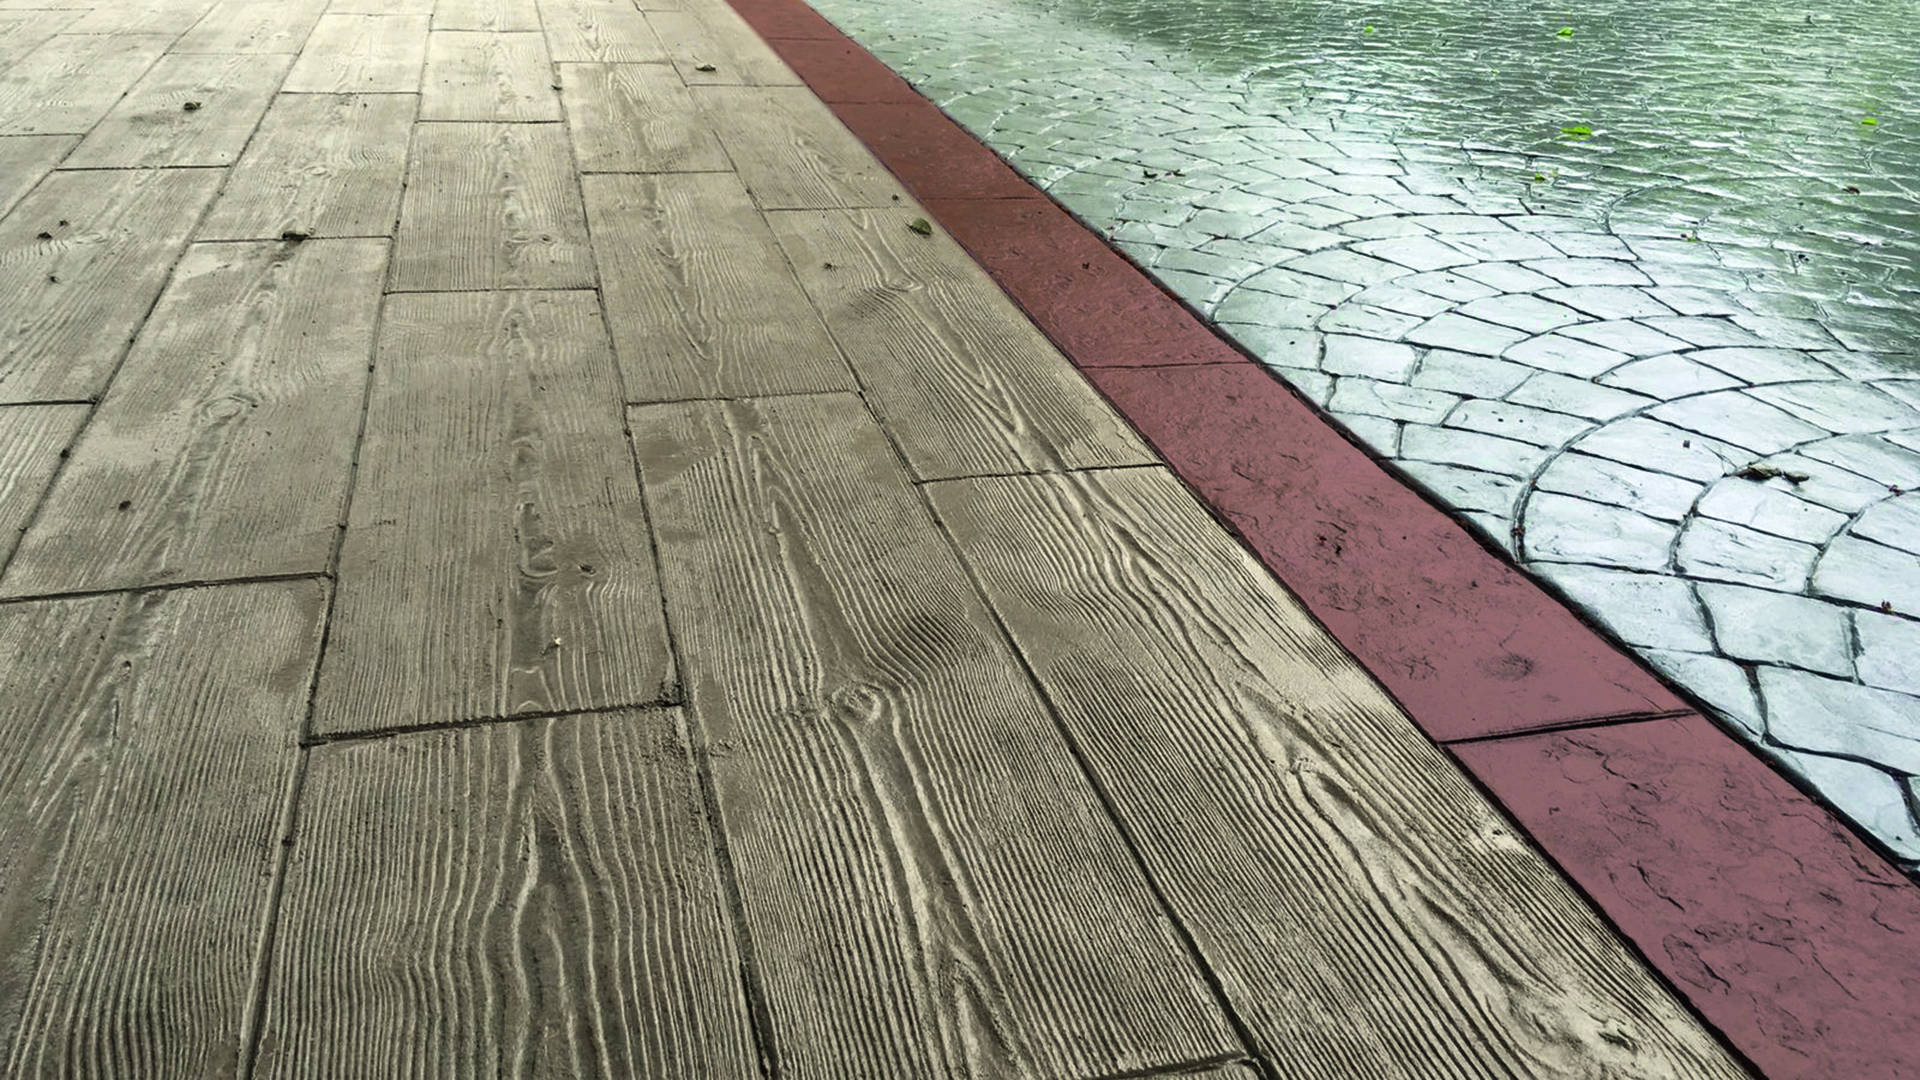 urbanization with wood imitation imprinted concrete floor